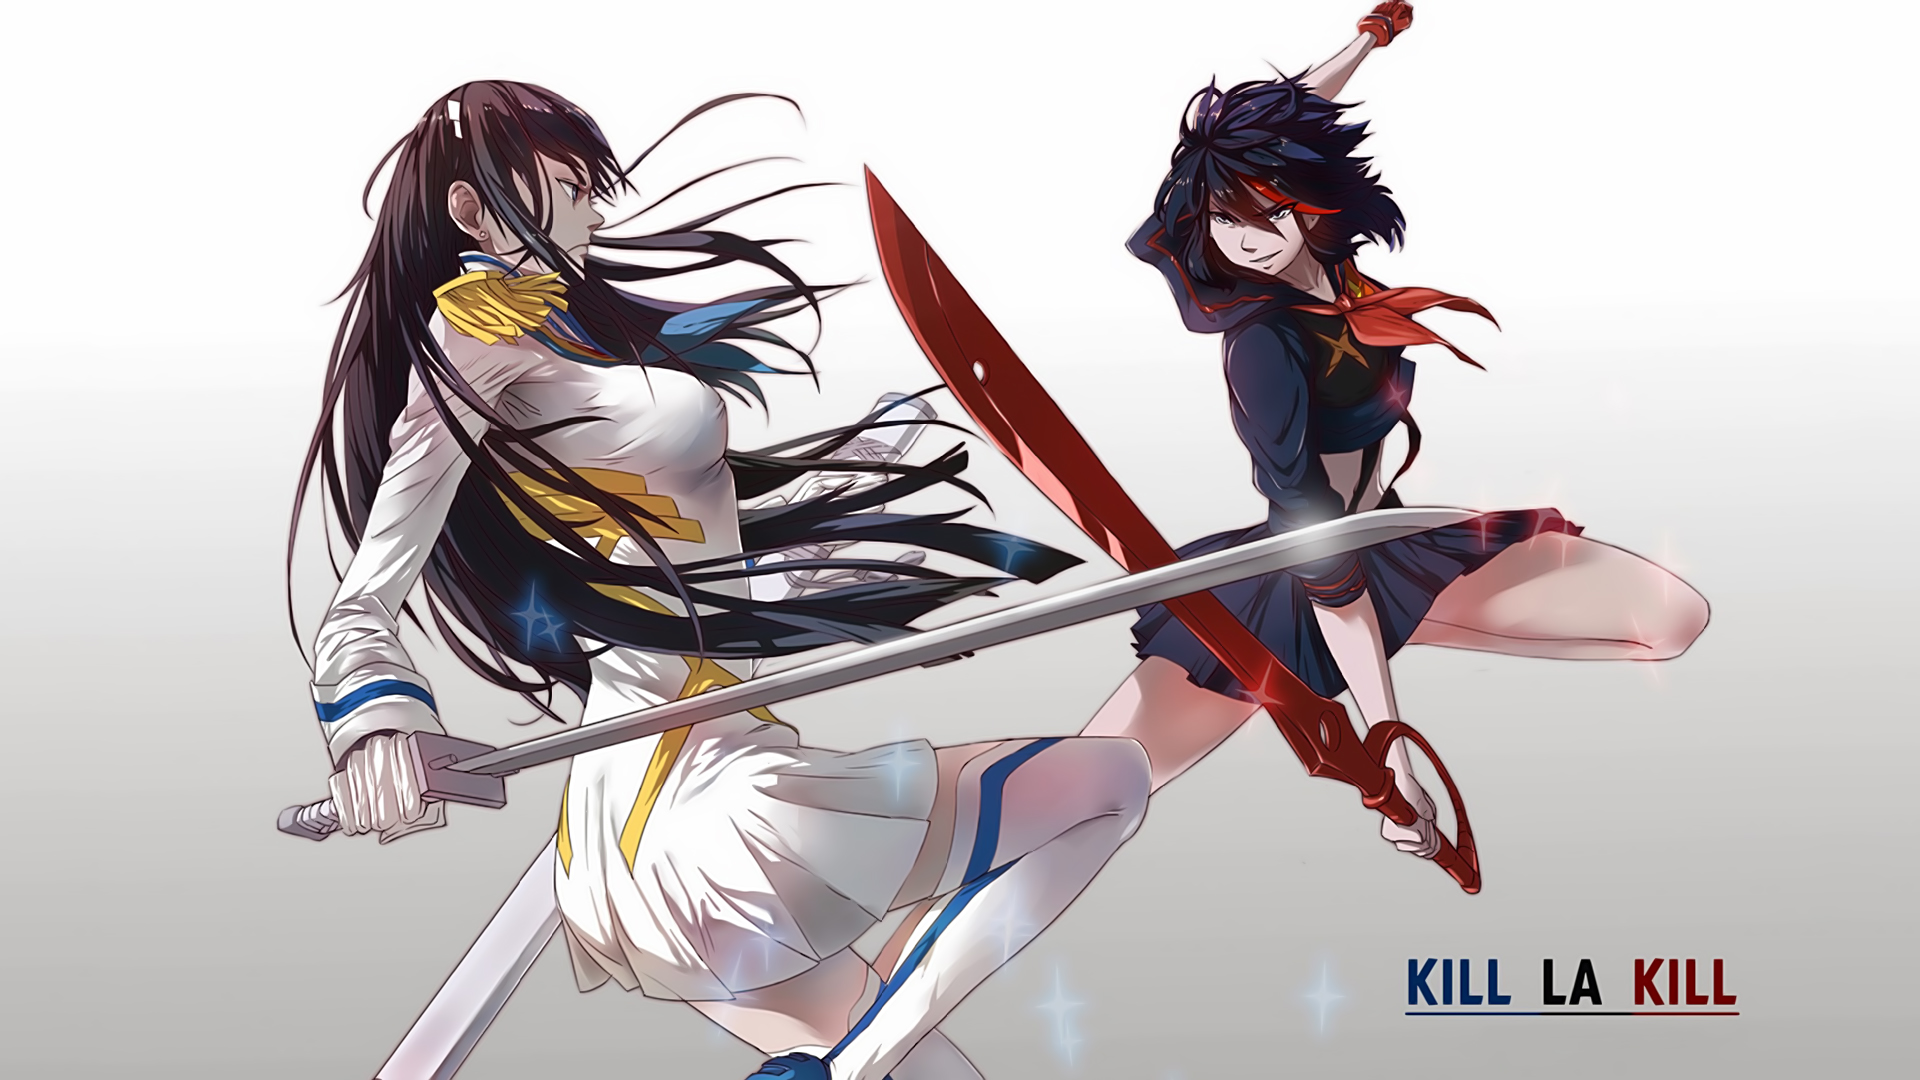 Baixe gratuitamente a imagem Anime, Ryuko Matoi, Kill La Kill, Satsuki Kiryuin na área de trabalho do seu PC